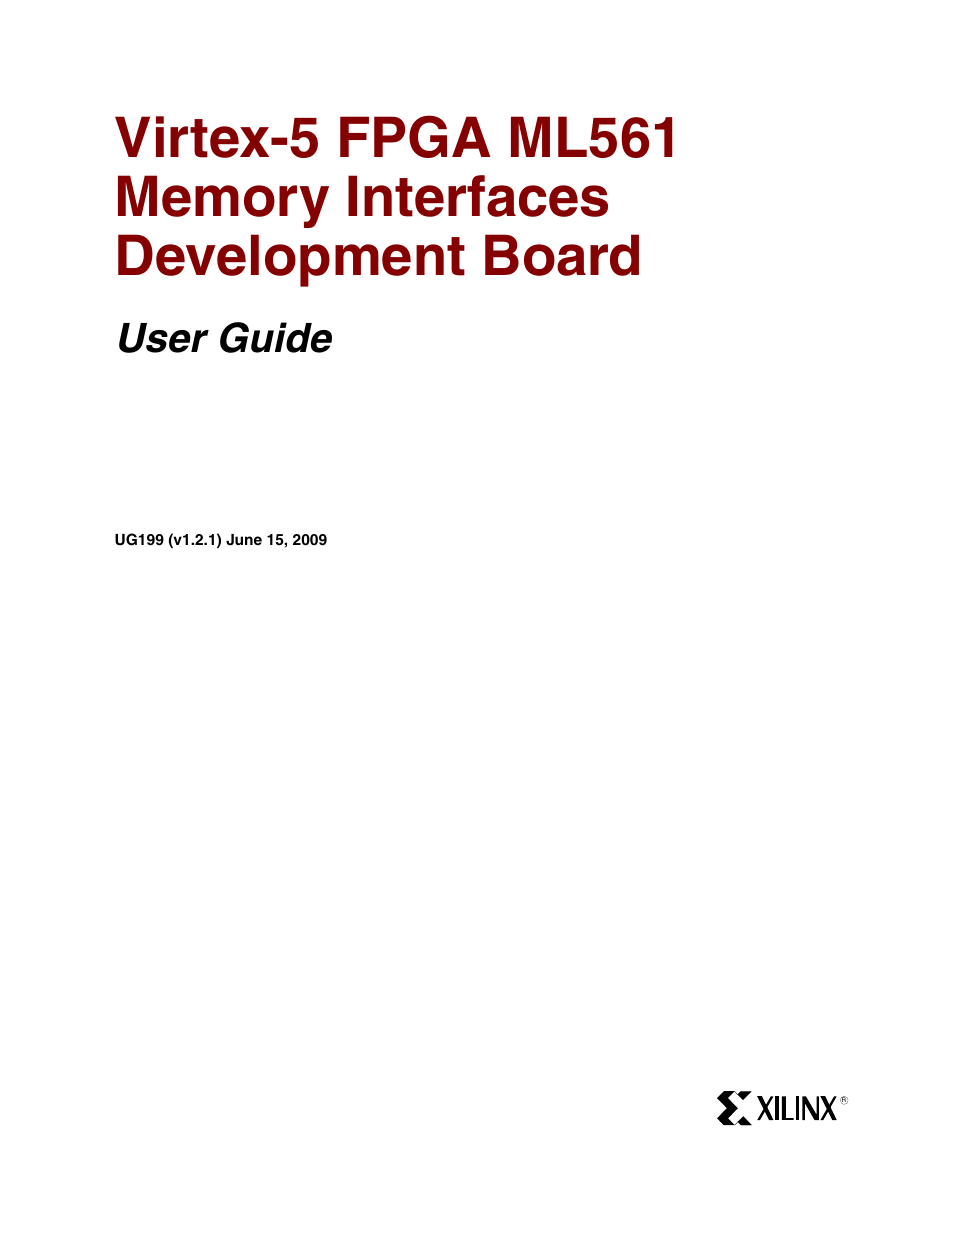 Xilinx Virtex-5 FPGA ML561 User Manual | 140 pages